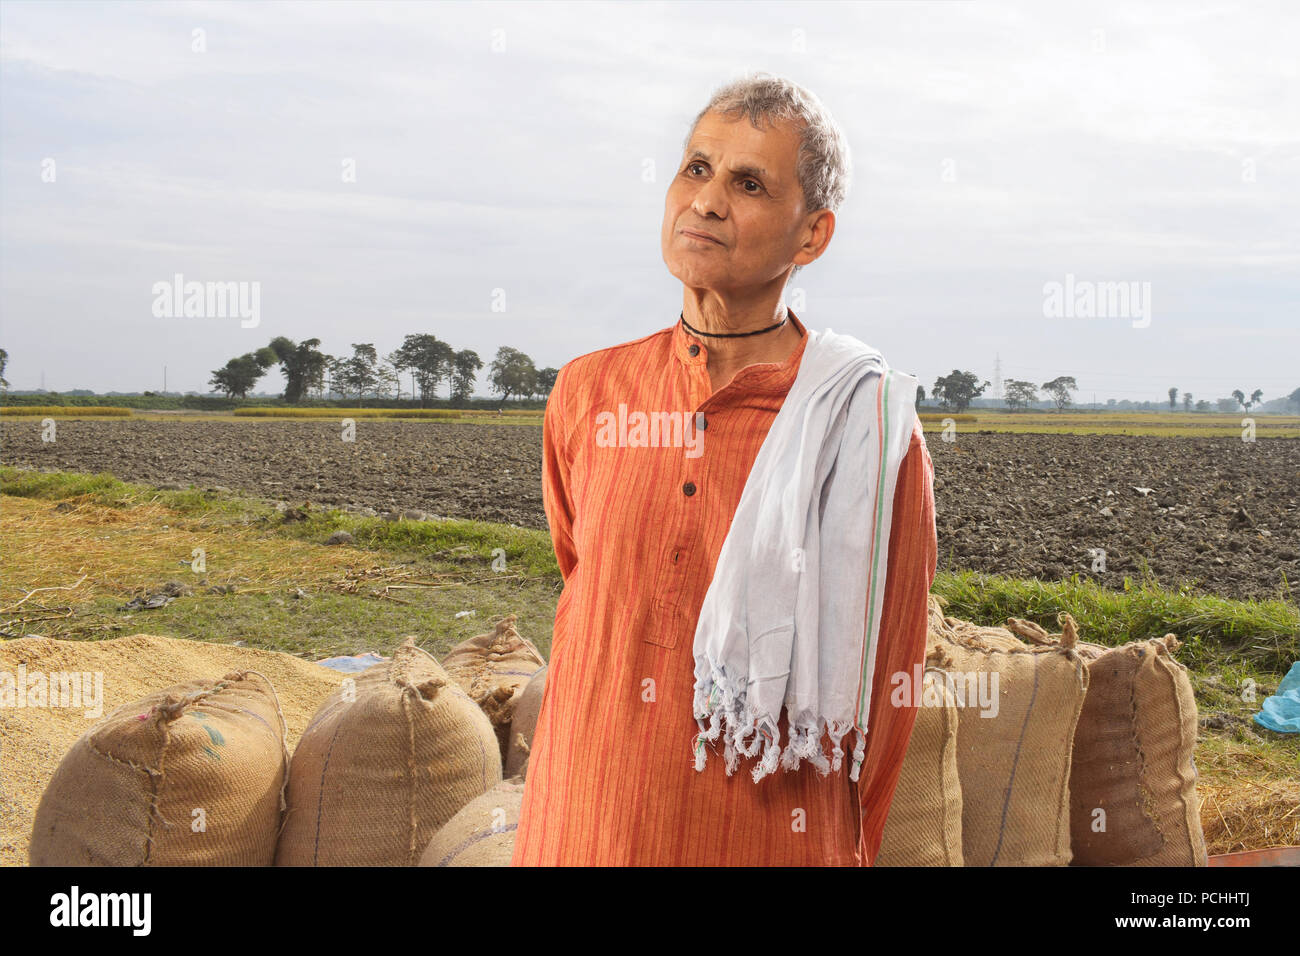 Portrait of farmer standing in paddy field Stock Photo